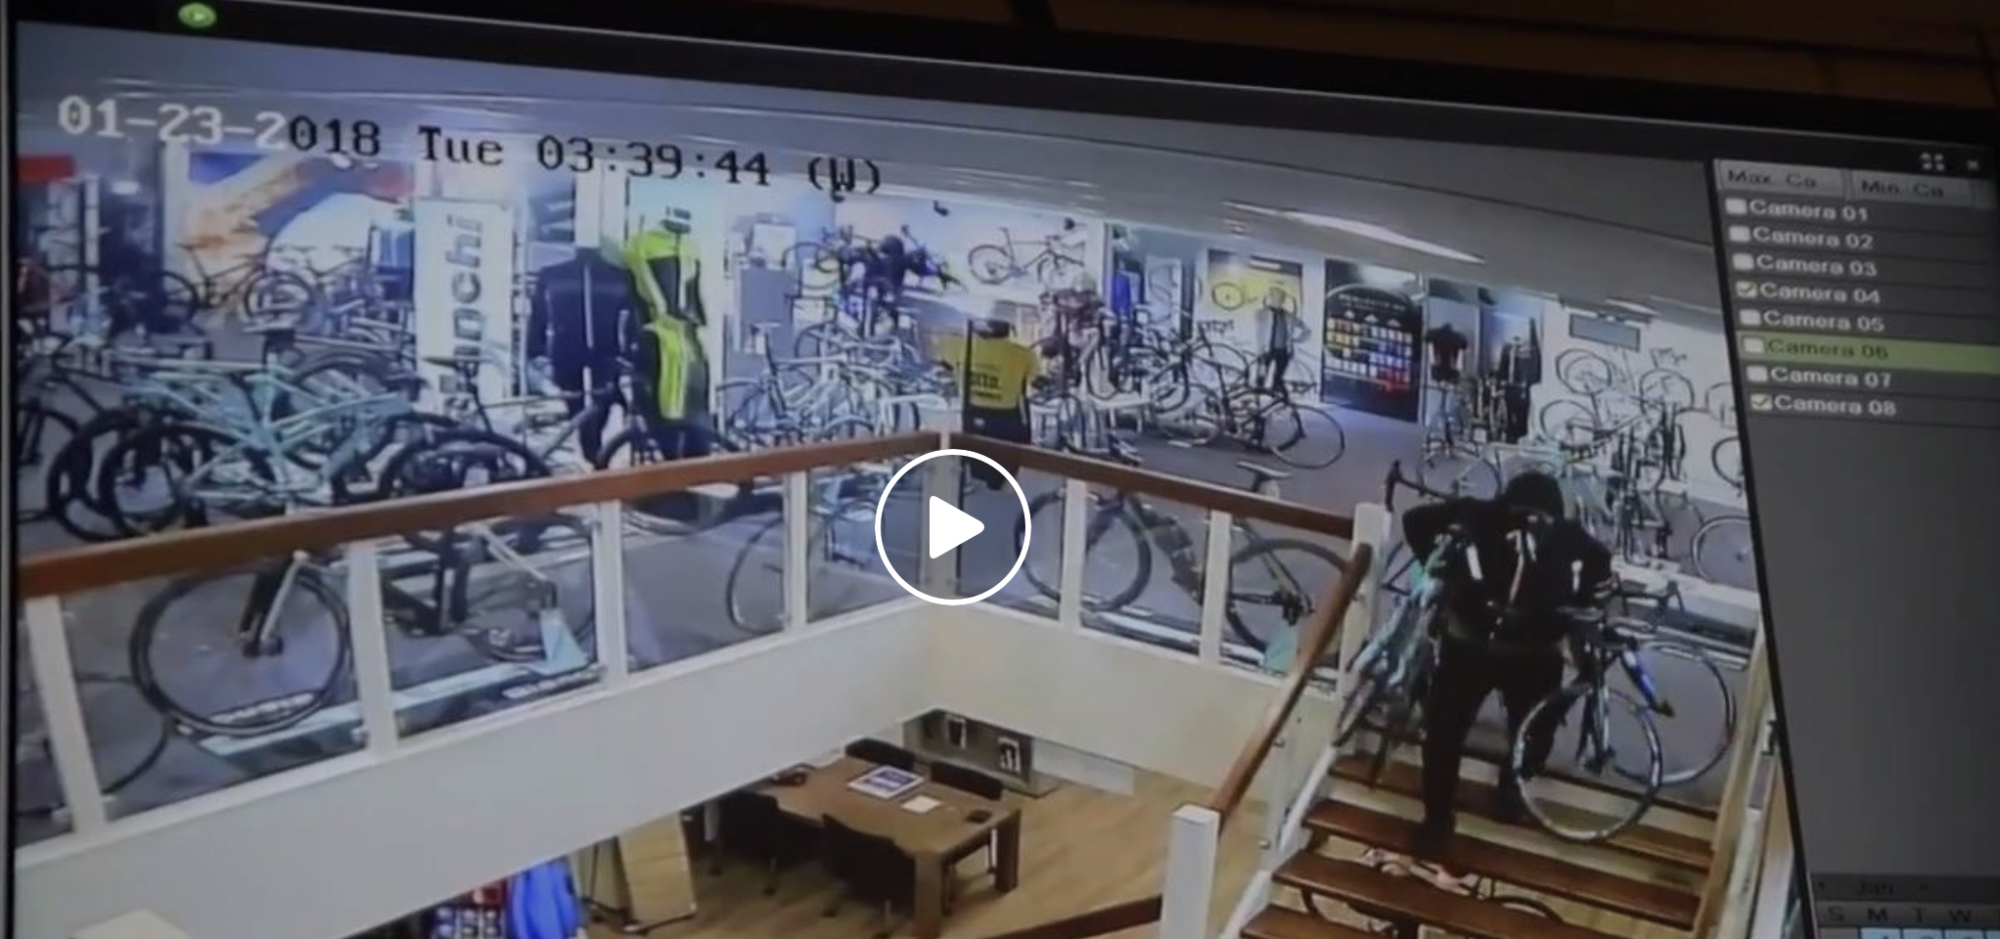 [Video] Come rubare 100.000eu di bici in 3'